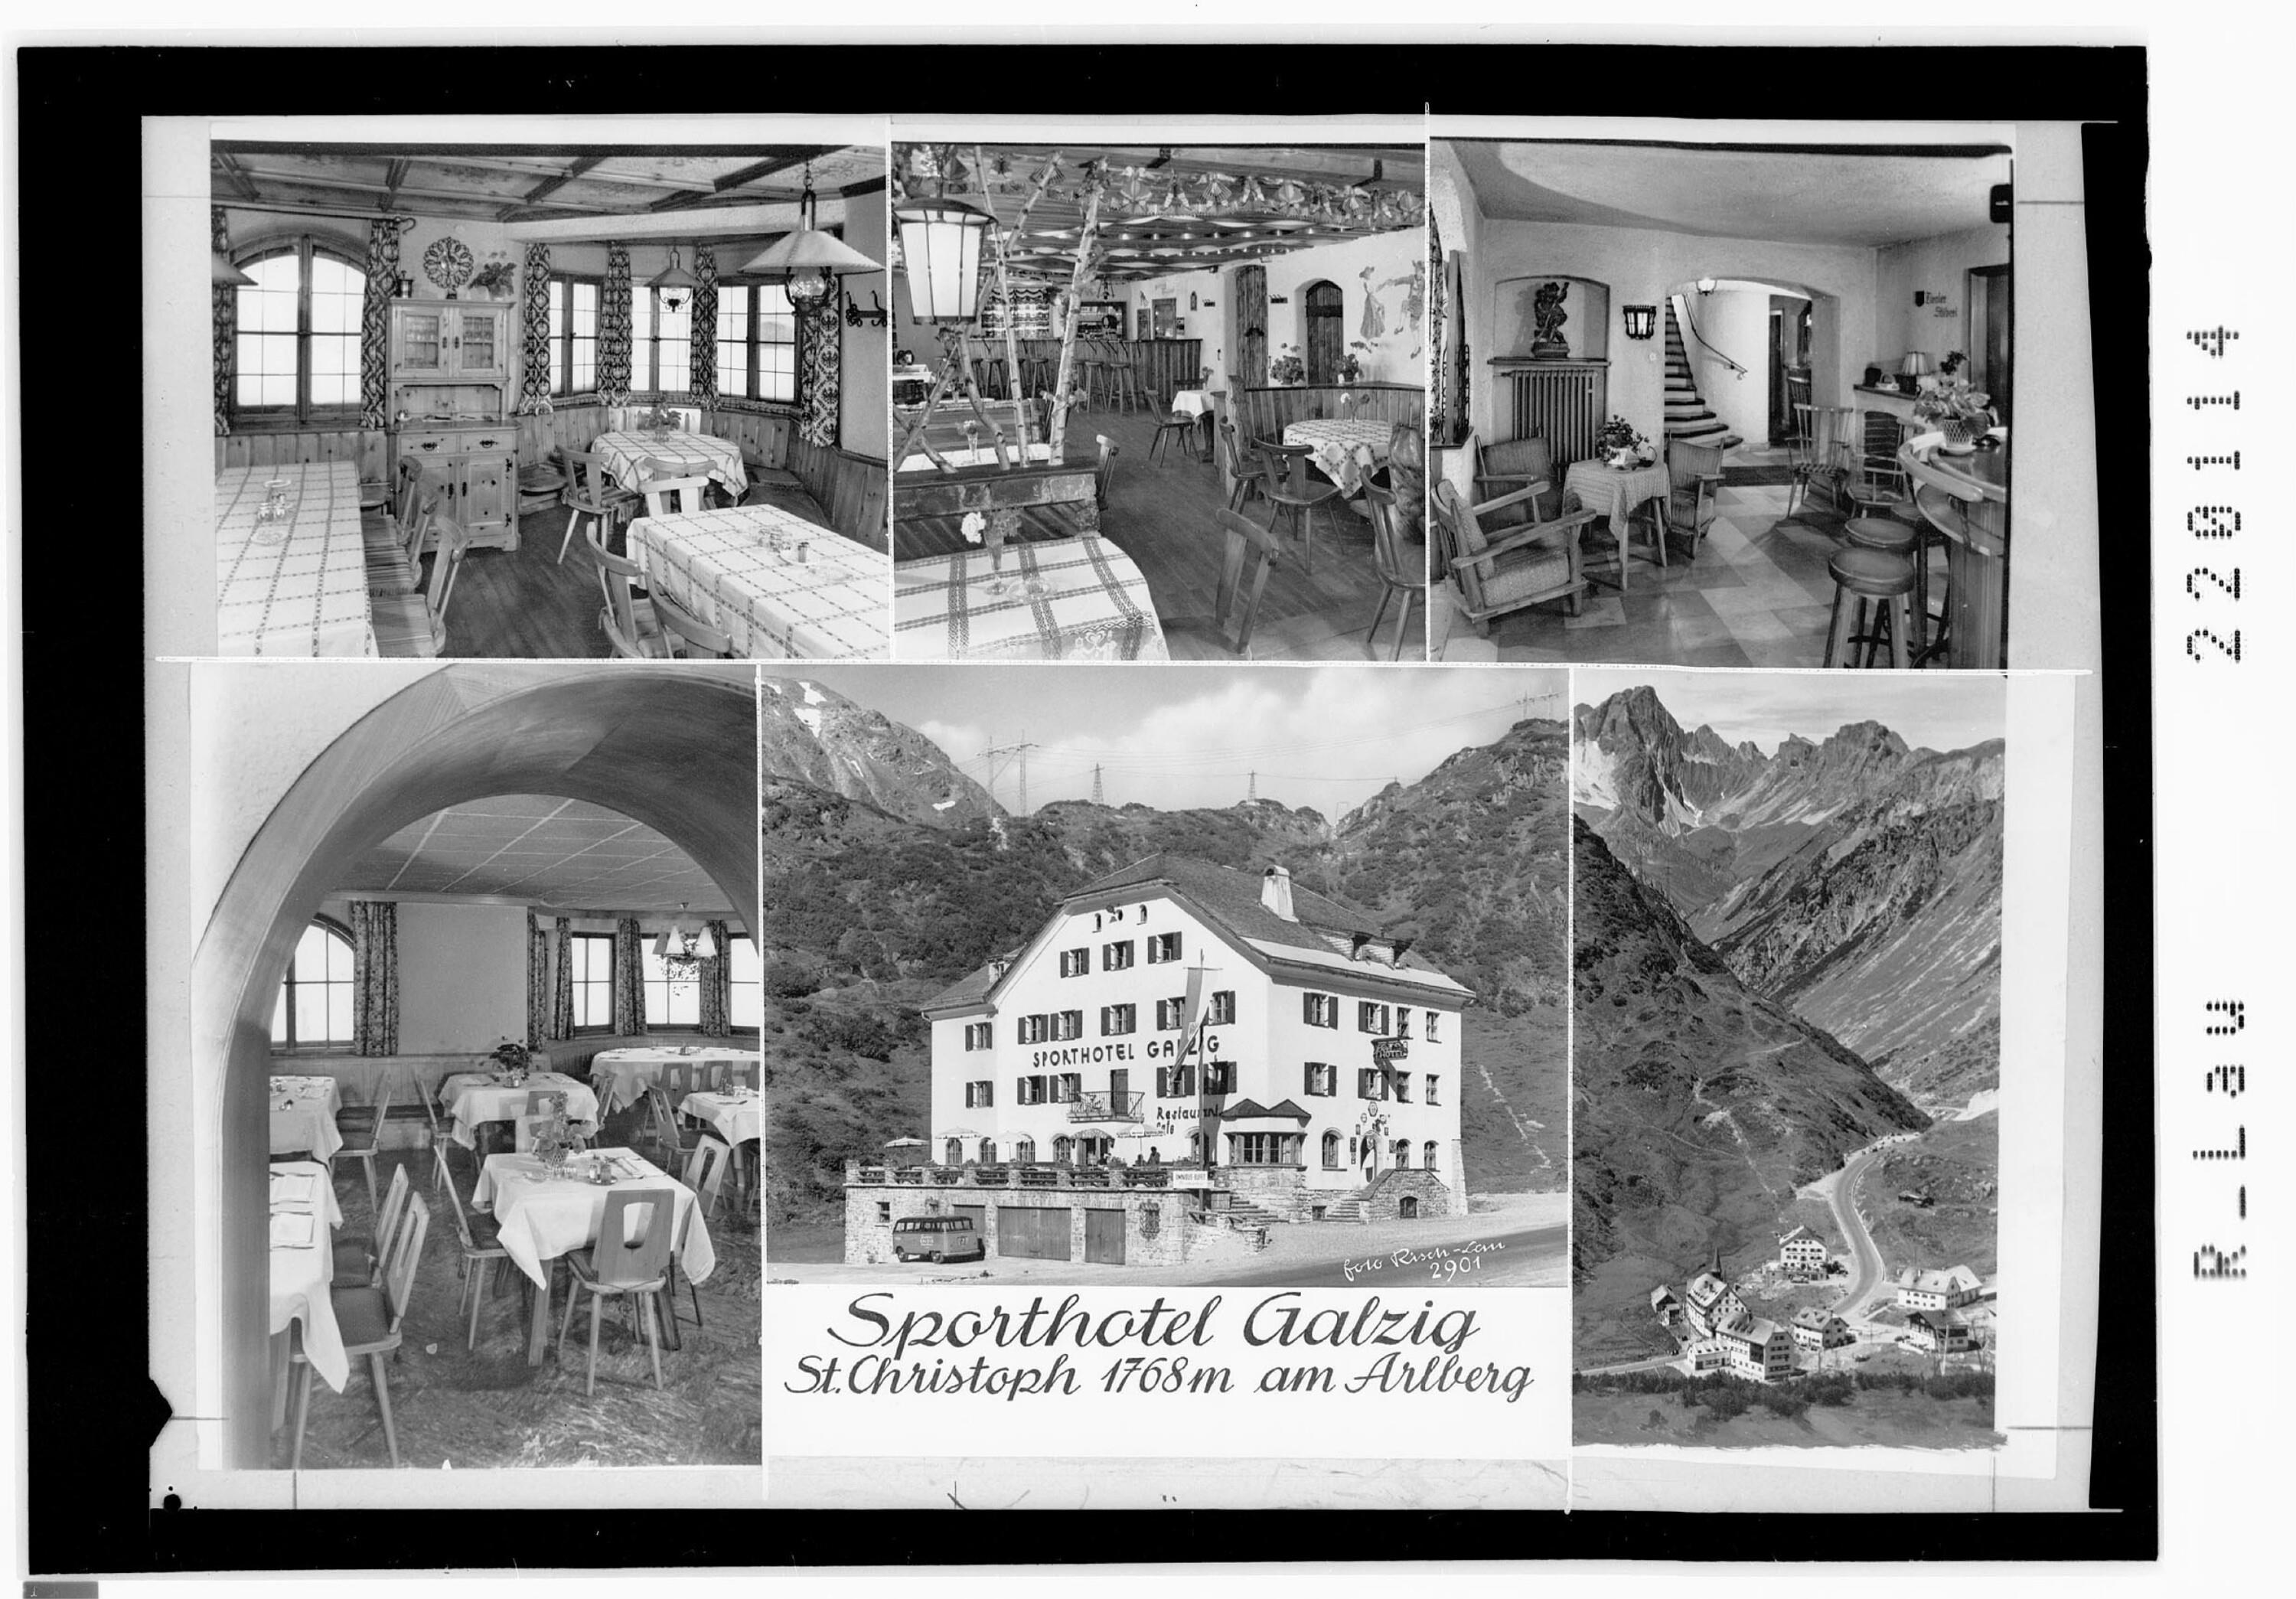 Sporthotel Galzig St.Christoph 1768 m am Arlberg></div>


    <hr>
    <div class=